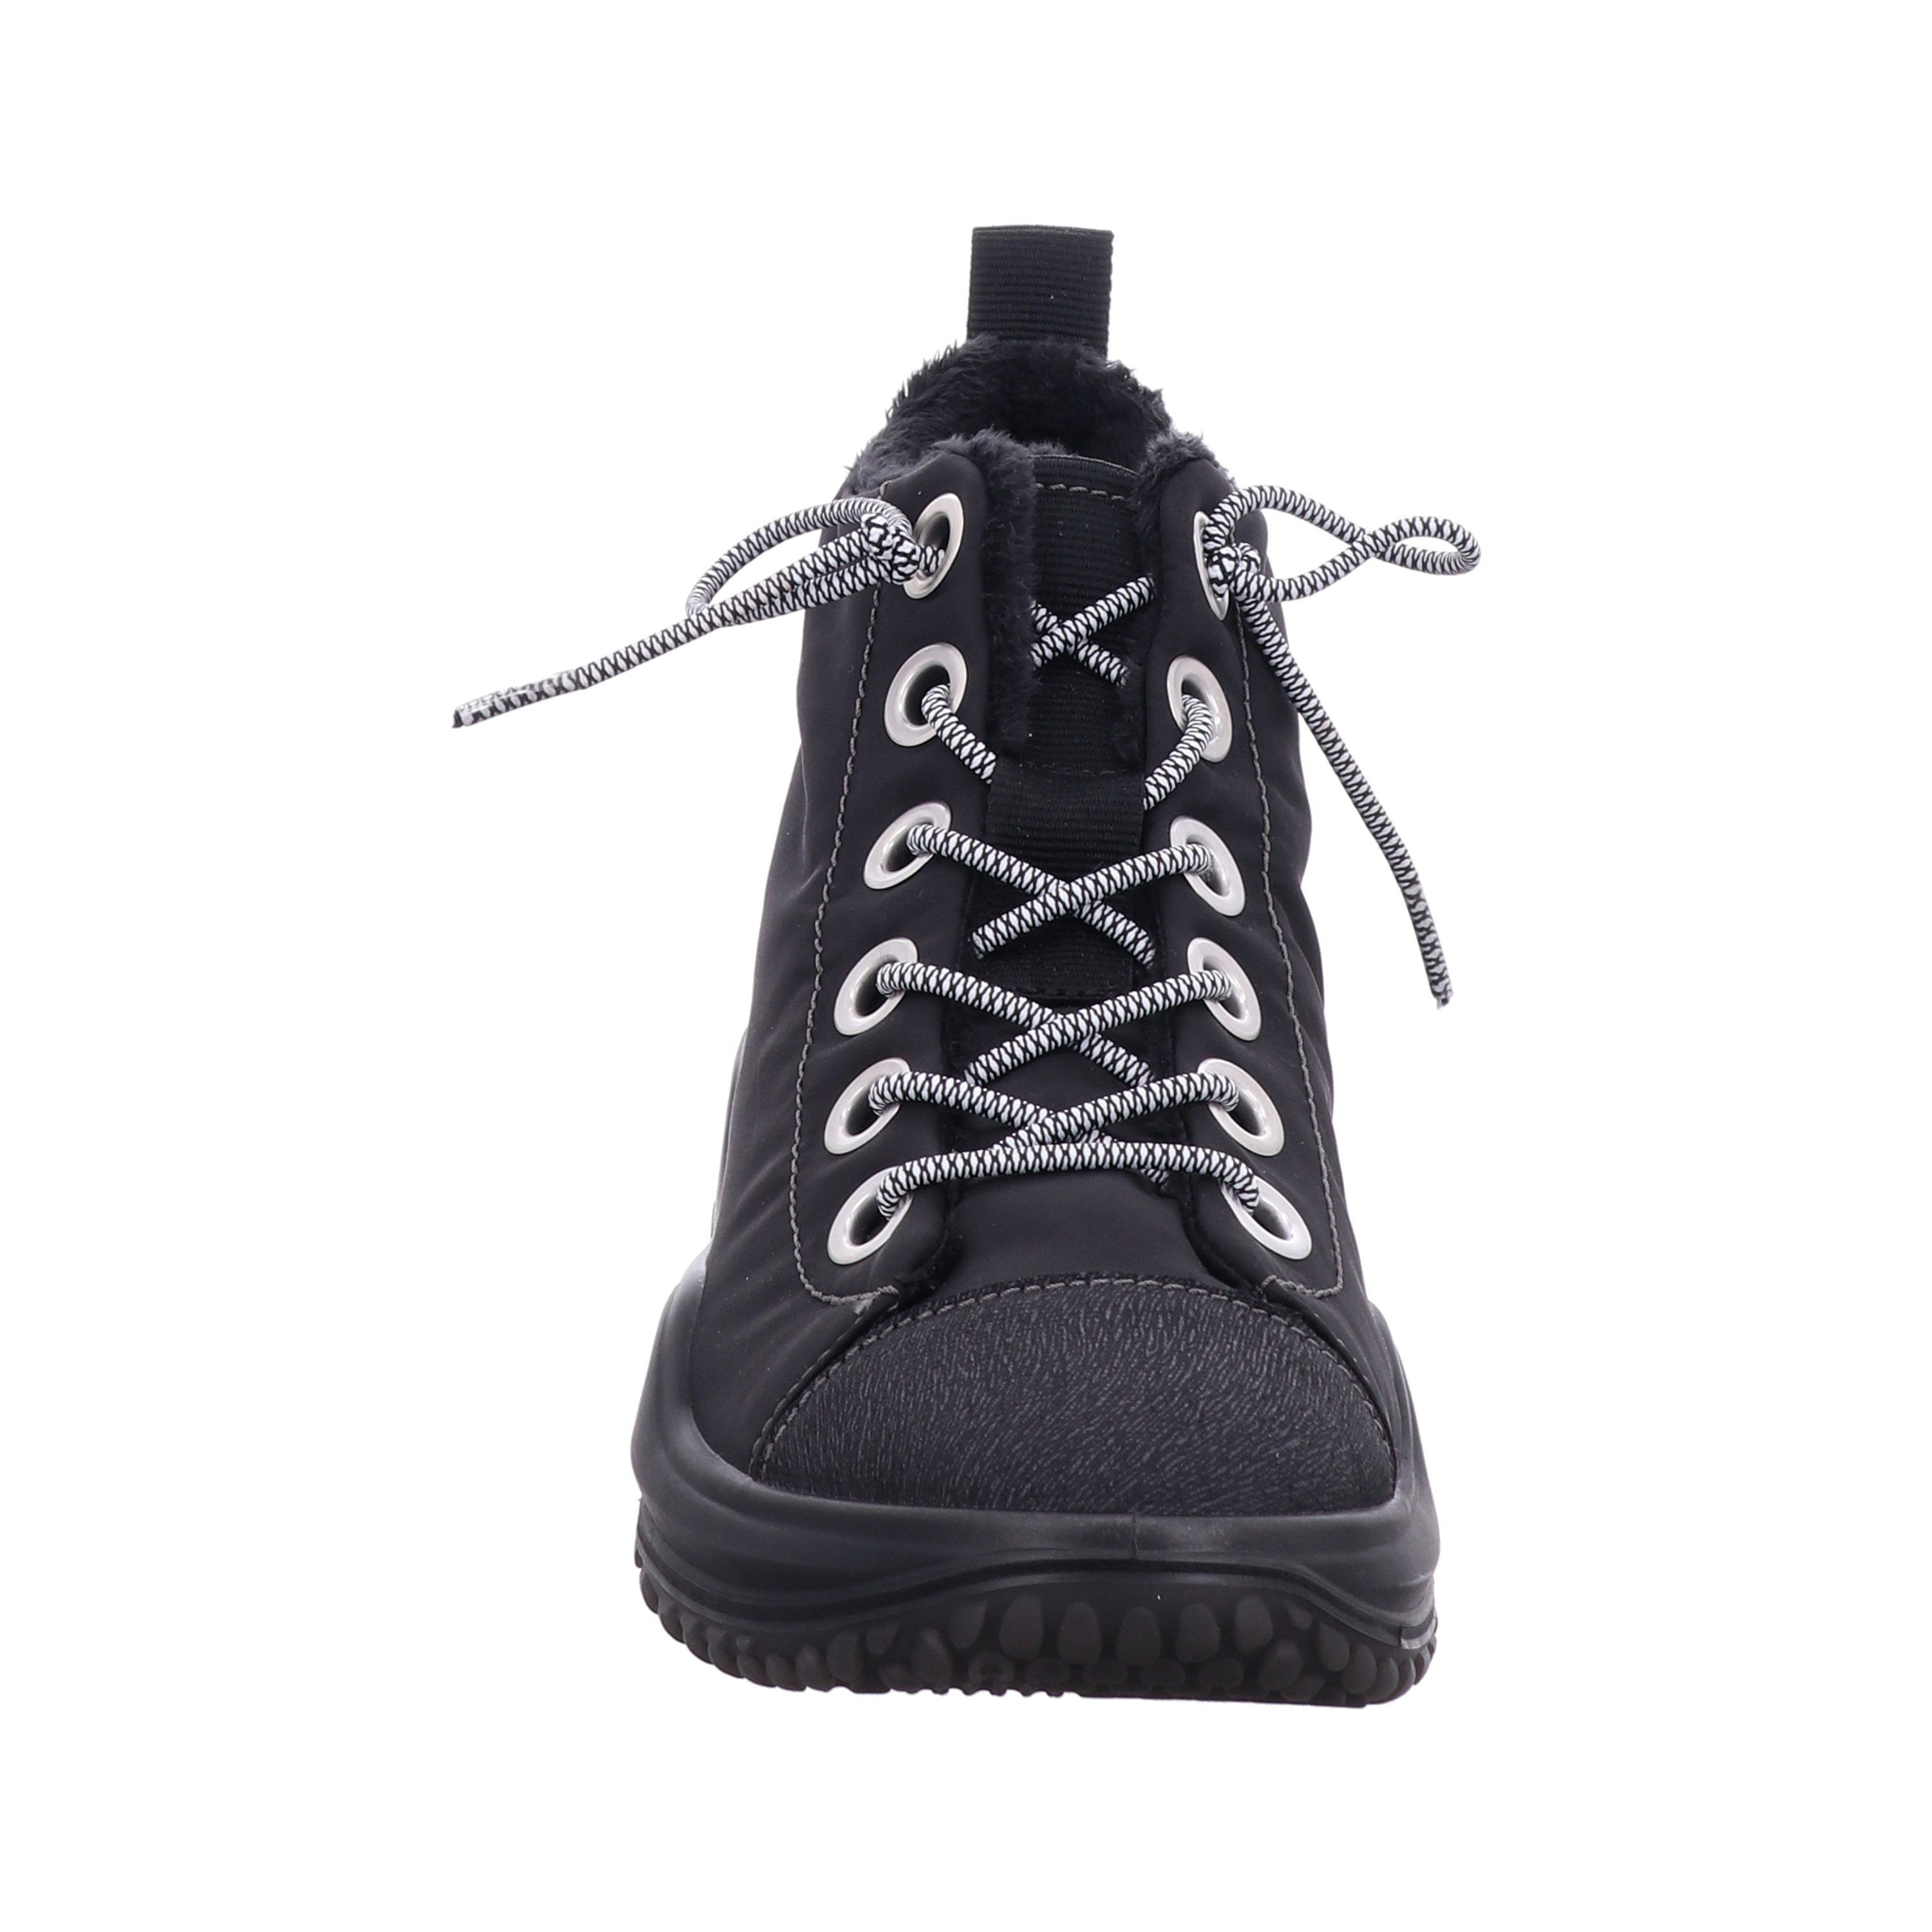 Schuhe Stiefeletten Westland Marla W17, schwarz Stiefelette